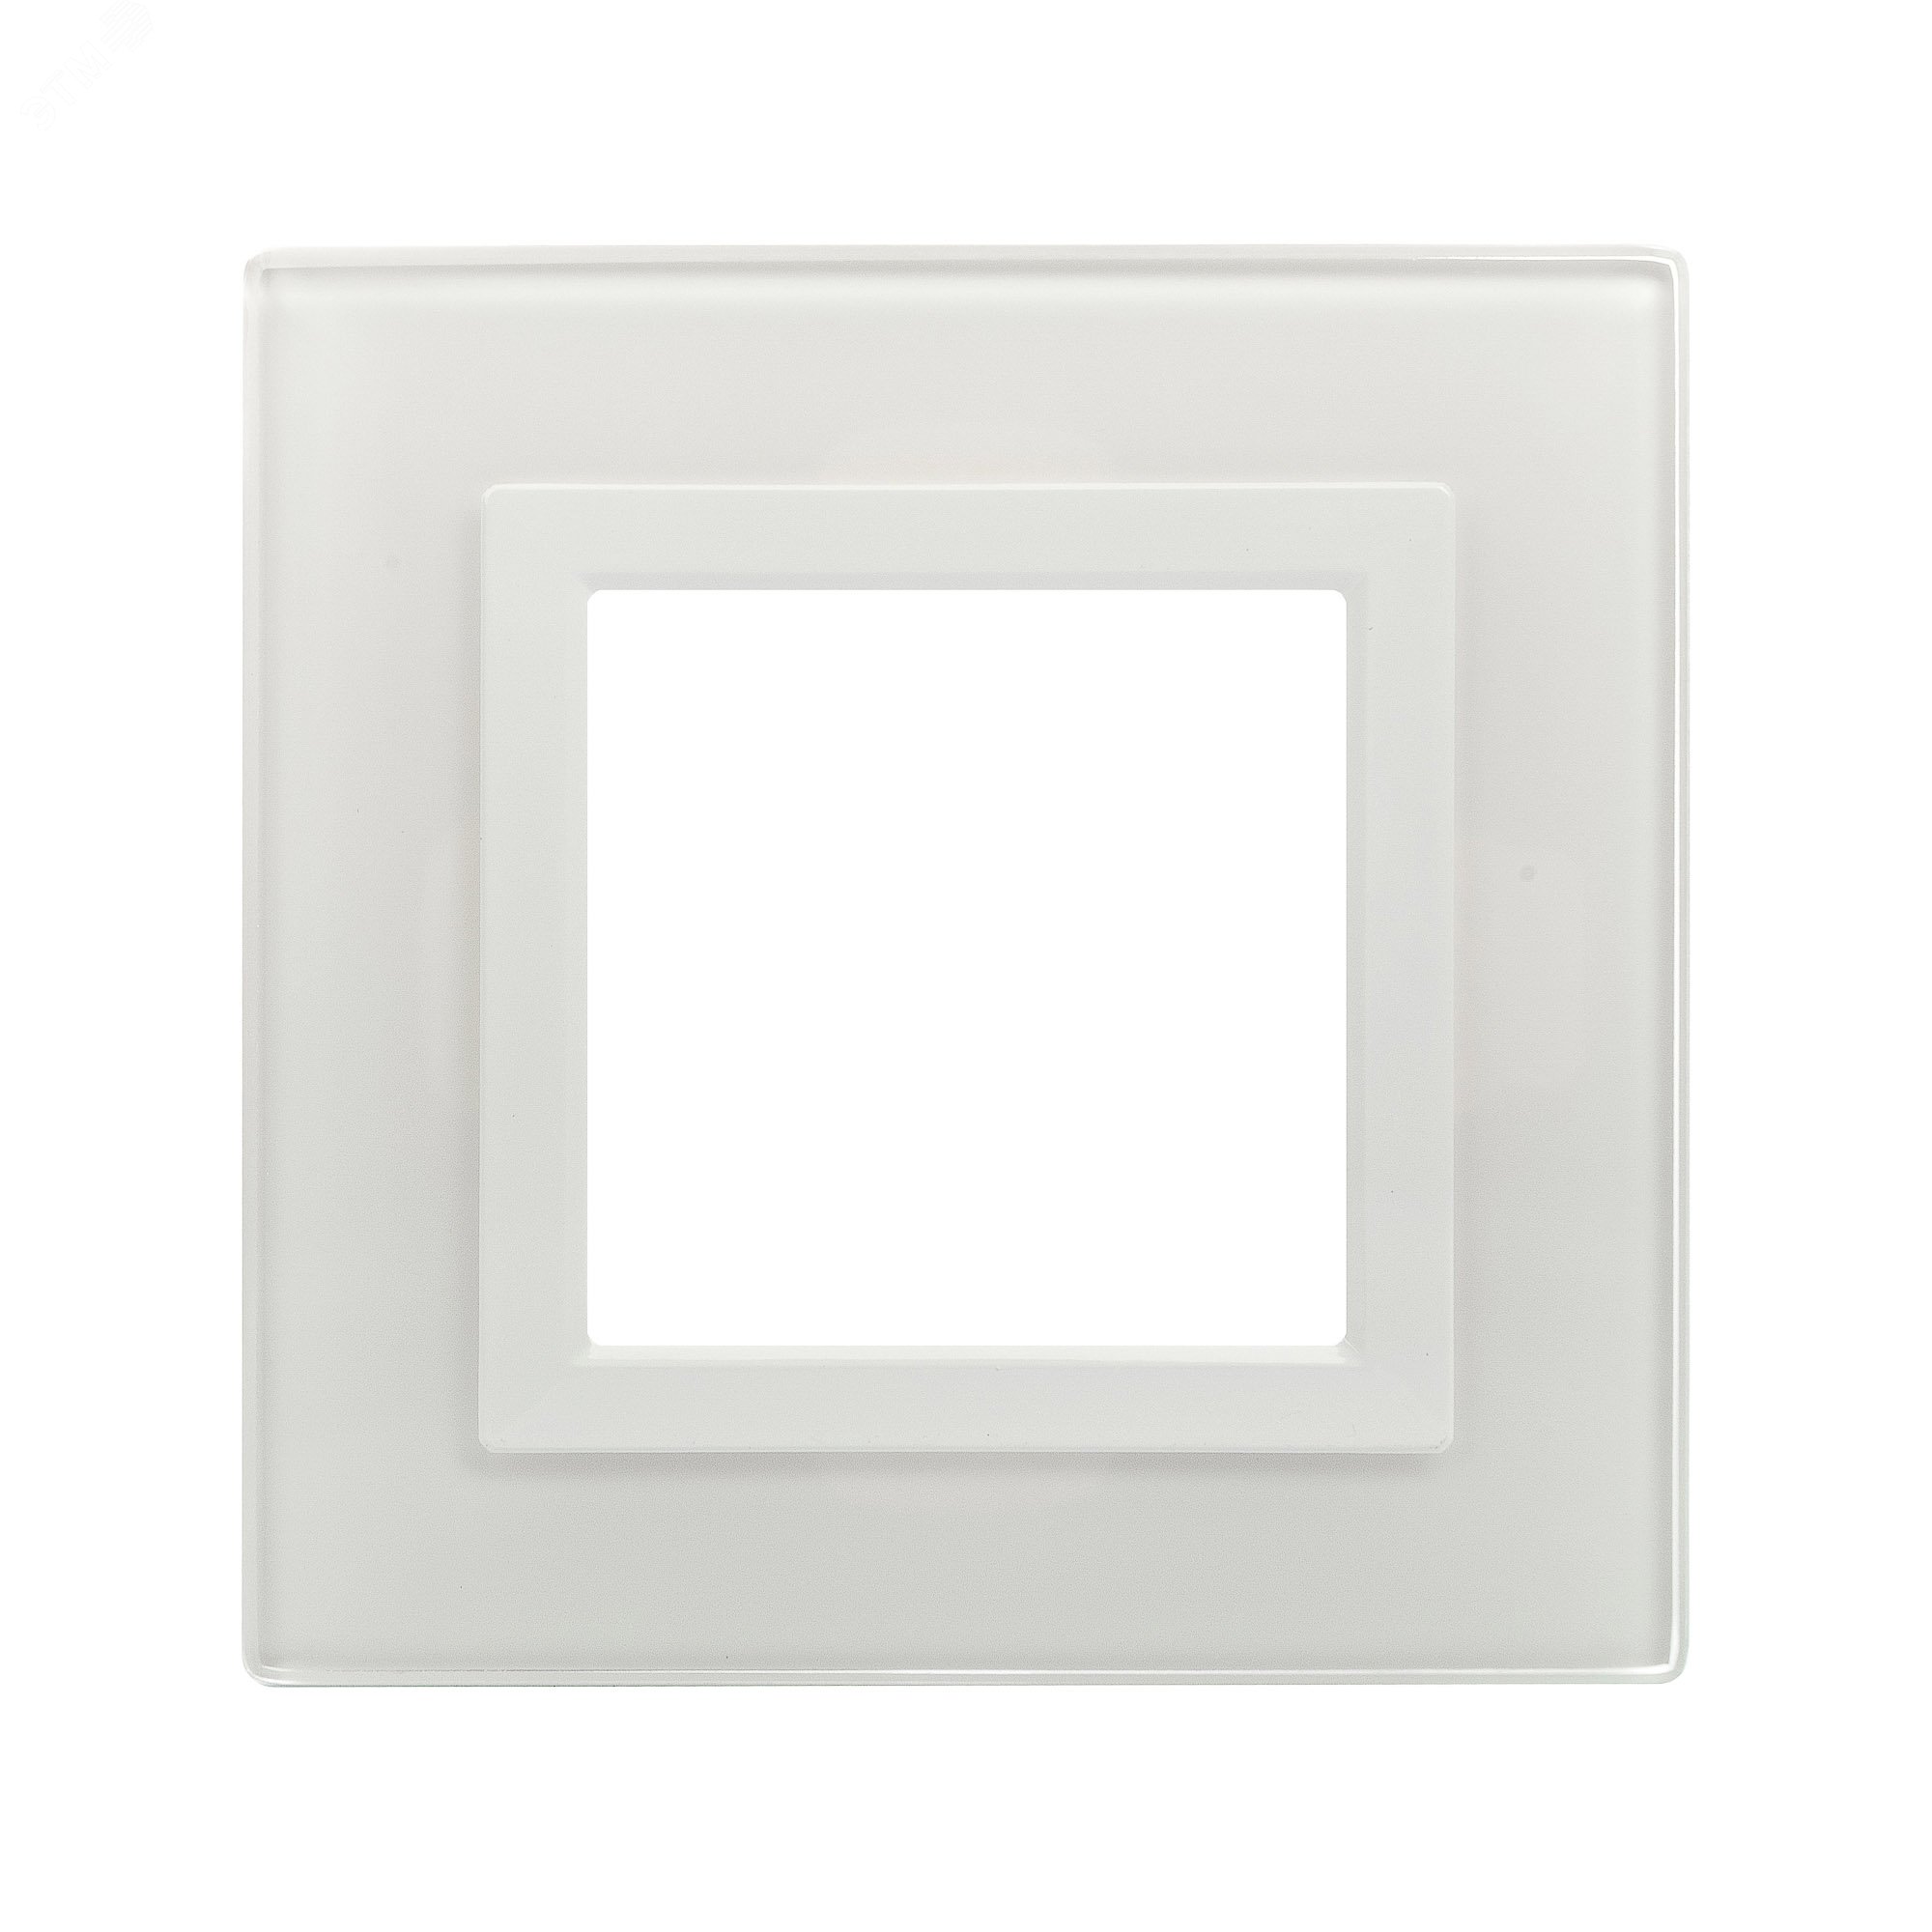 Рамка из натурального стекла,  ''Avanti'', белая, 2 модуля 4400822 DKC - превью 2